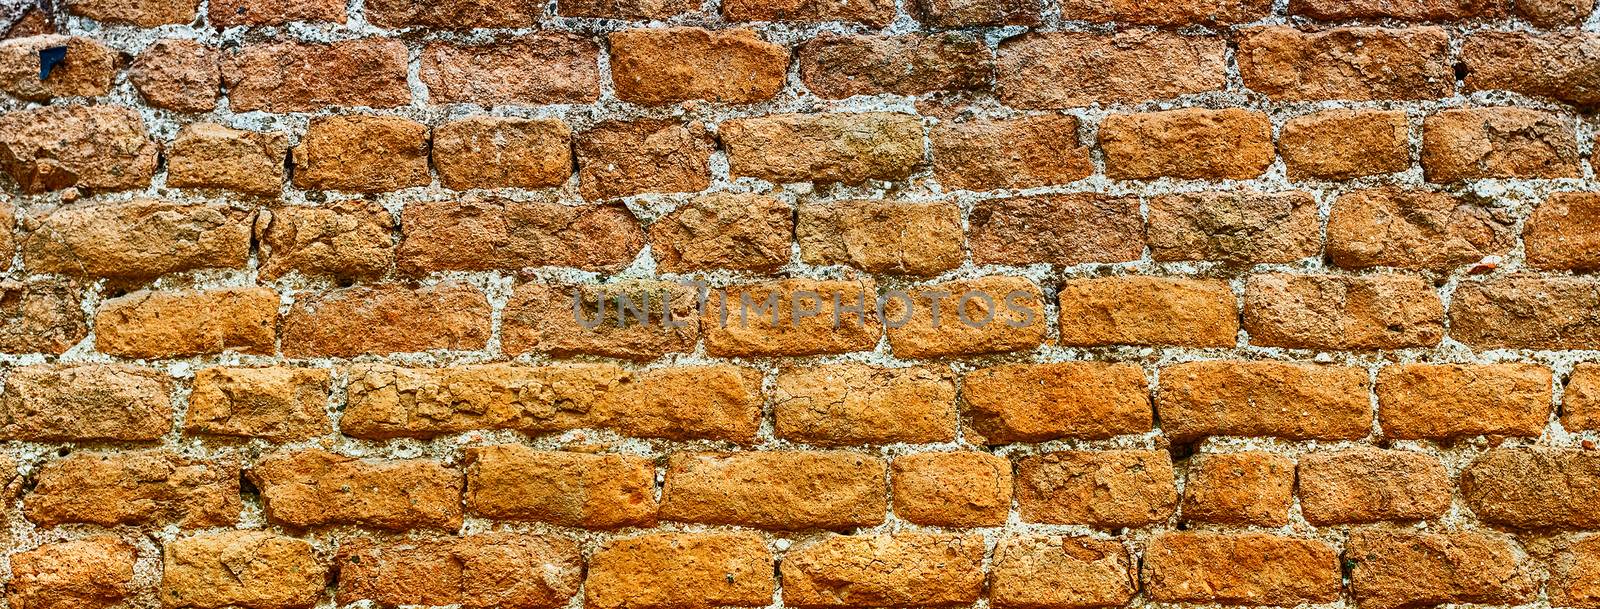 Stone Brick Wall Texture, may be used as background by marcorubino